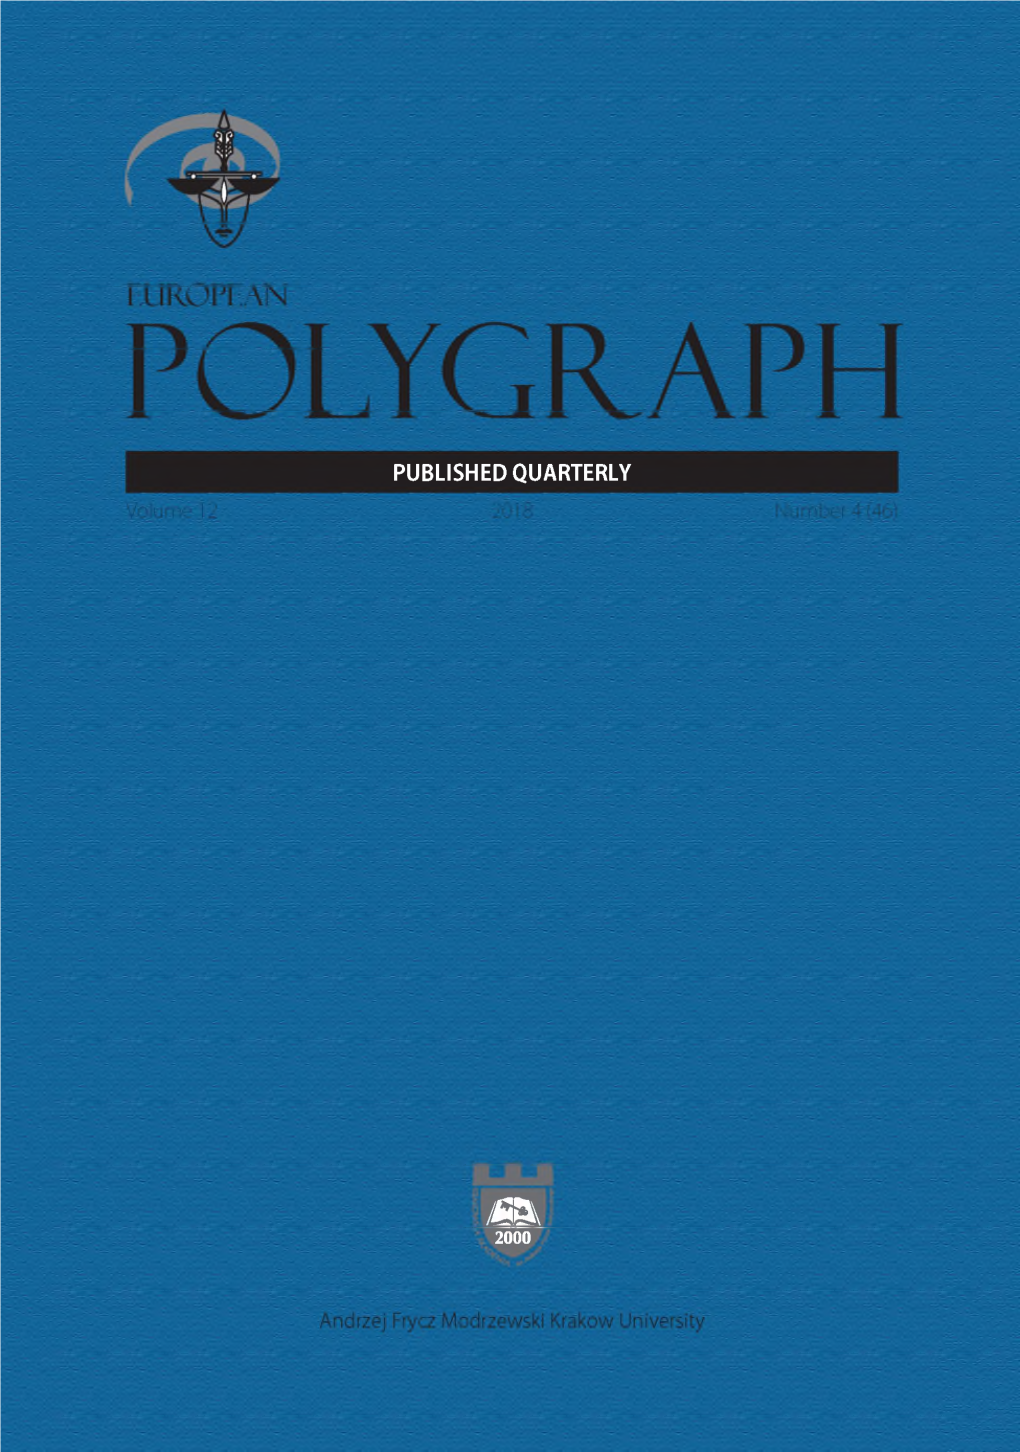 European Polygraph 2018, Volume 12, Number 4 (46)